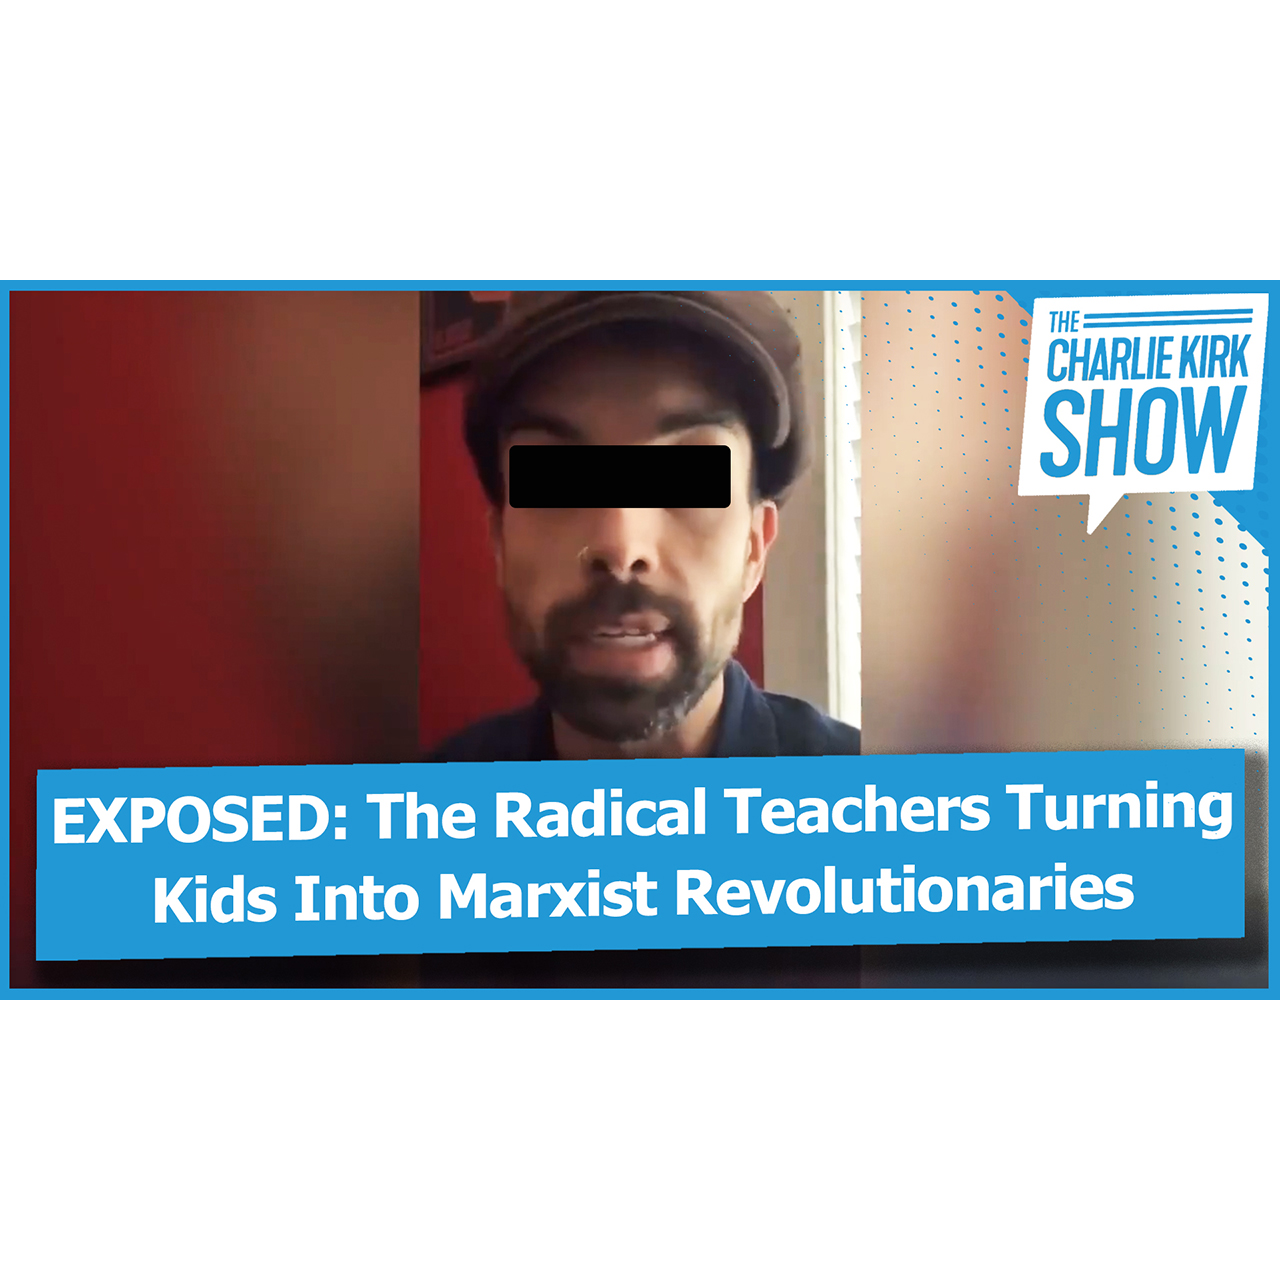 EXPOSED: The Radical Teachers Turning Kids Into Marxist Revolutionaries